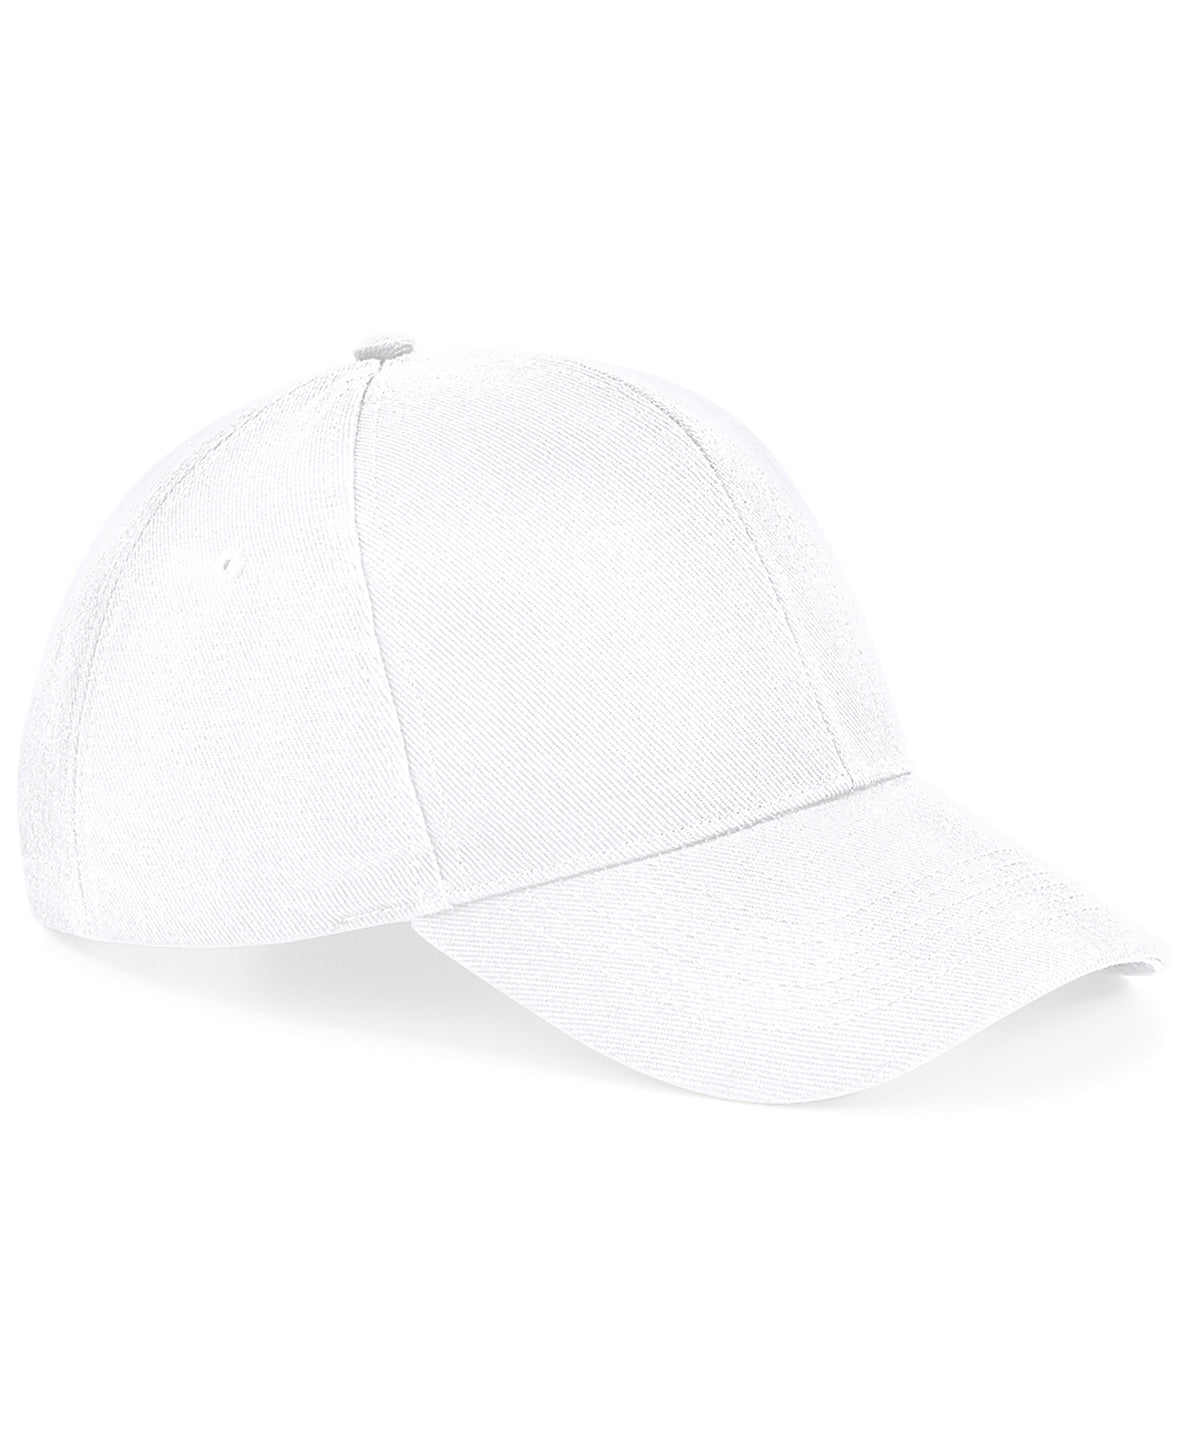 Personalised Caps - White Beechfield Ultimate 6-panel cap